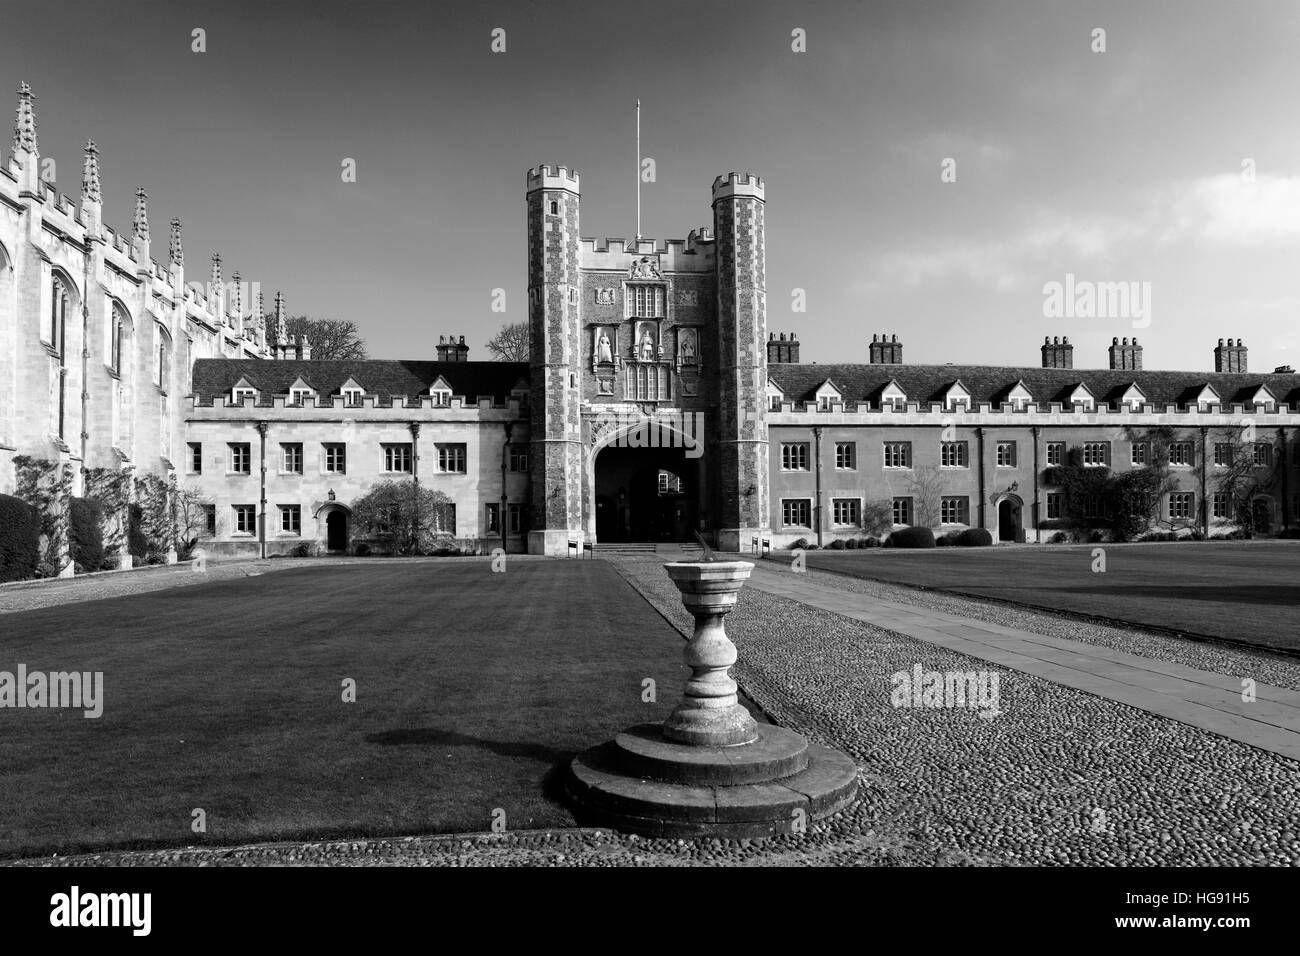 St Johns College courtyard, Cambridge City, Cambridgeshire, England, Uk Stock Photo